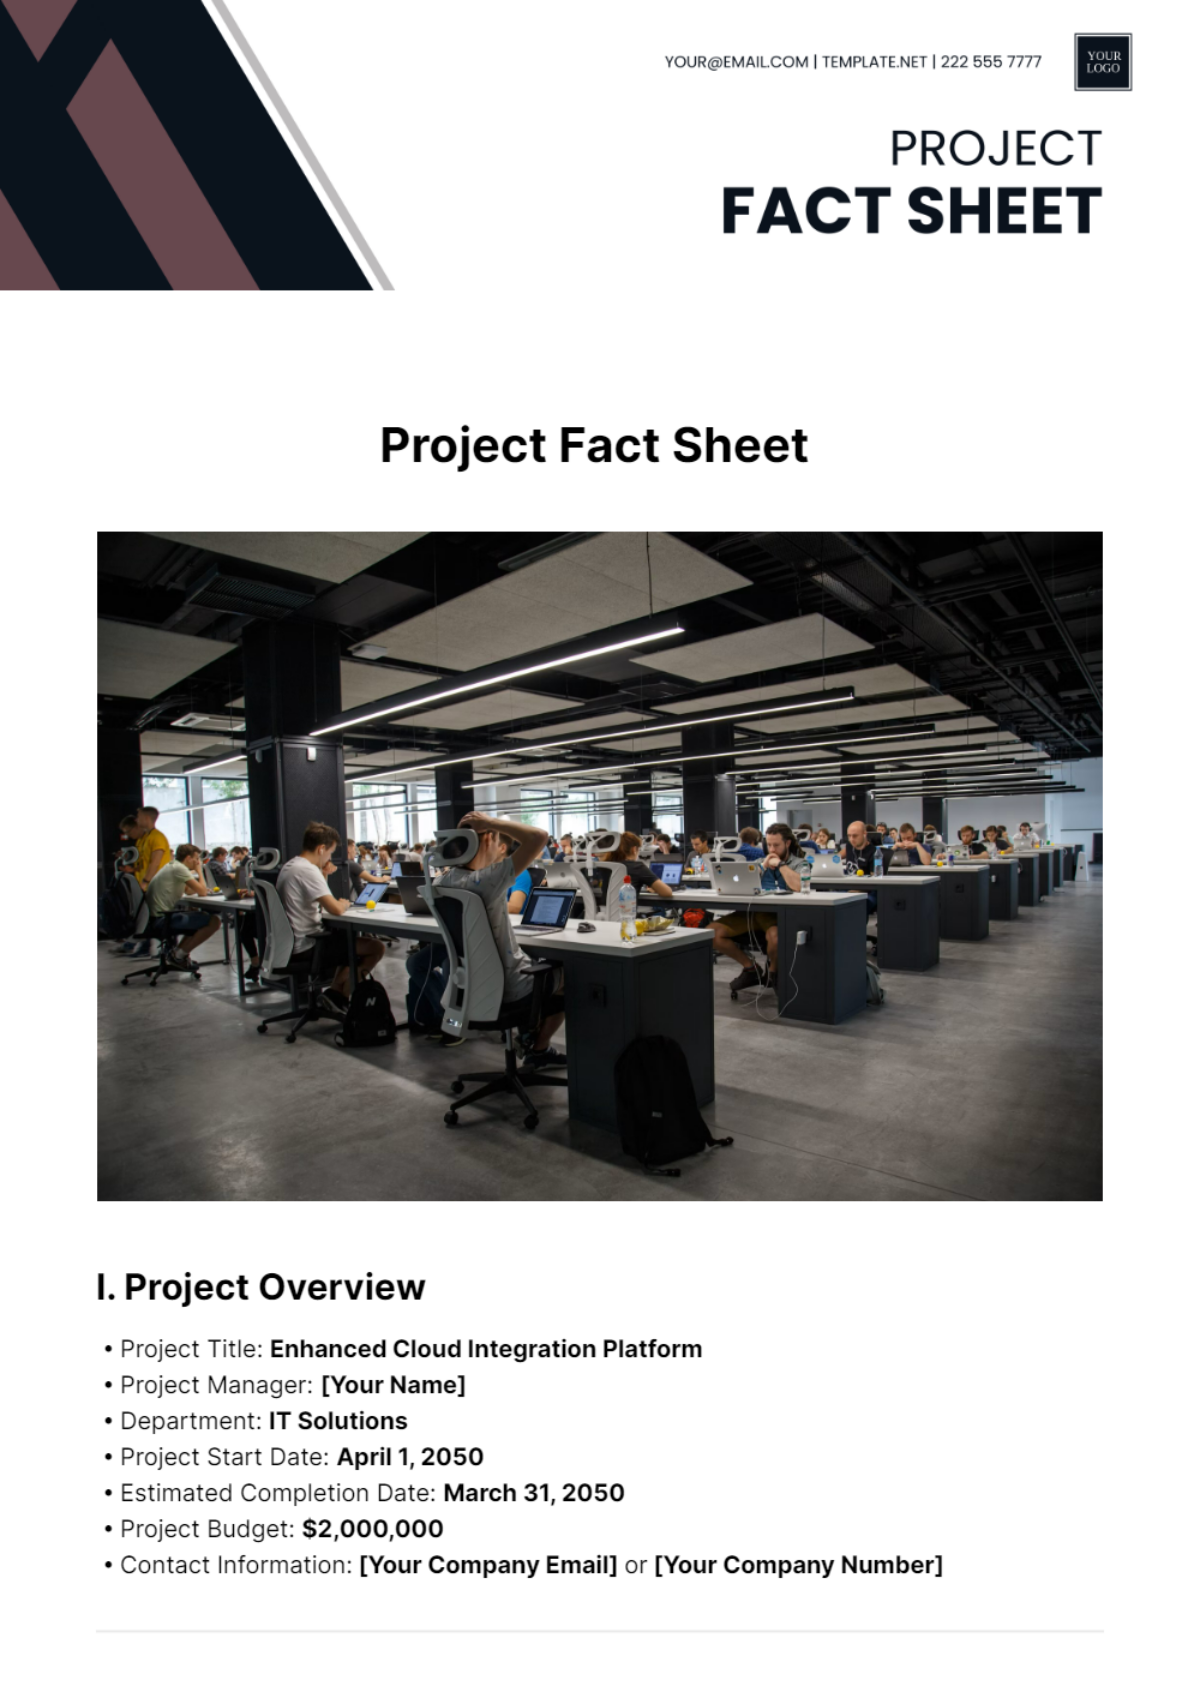 Project Fact Sheet Template